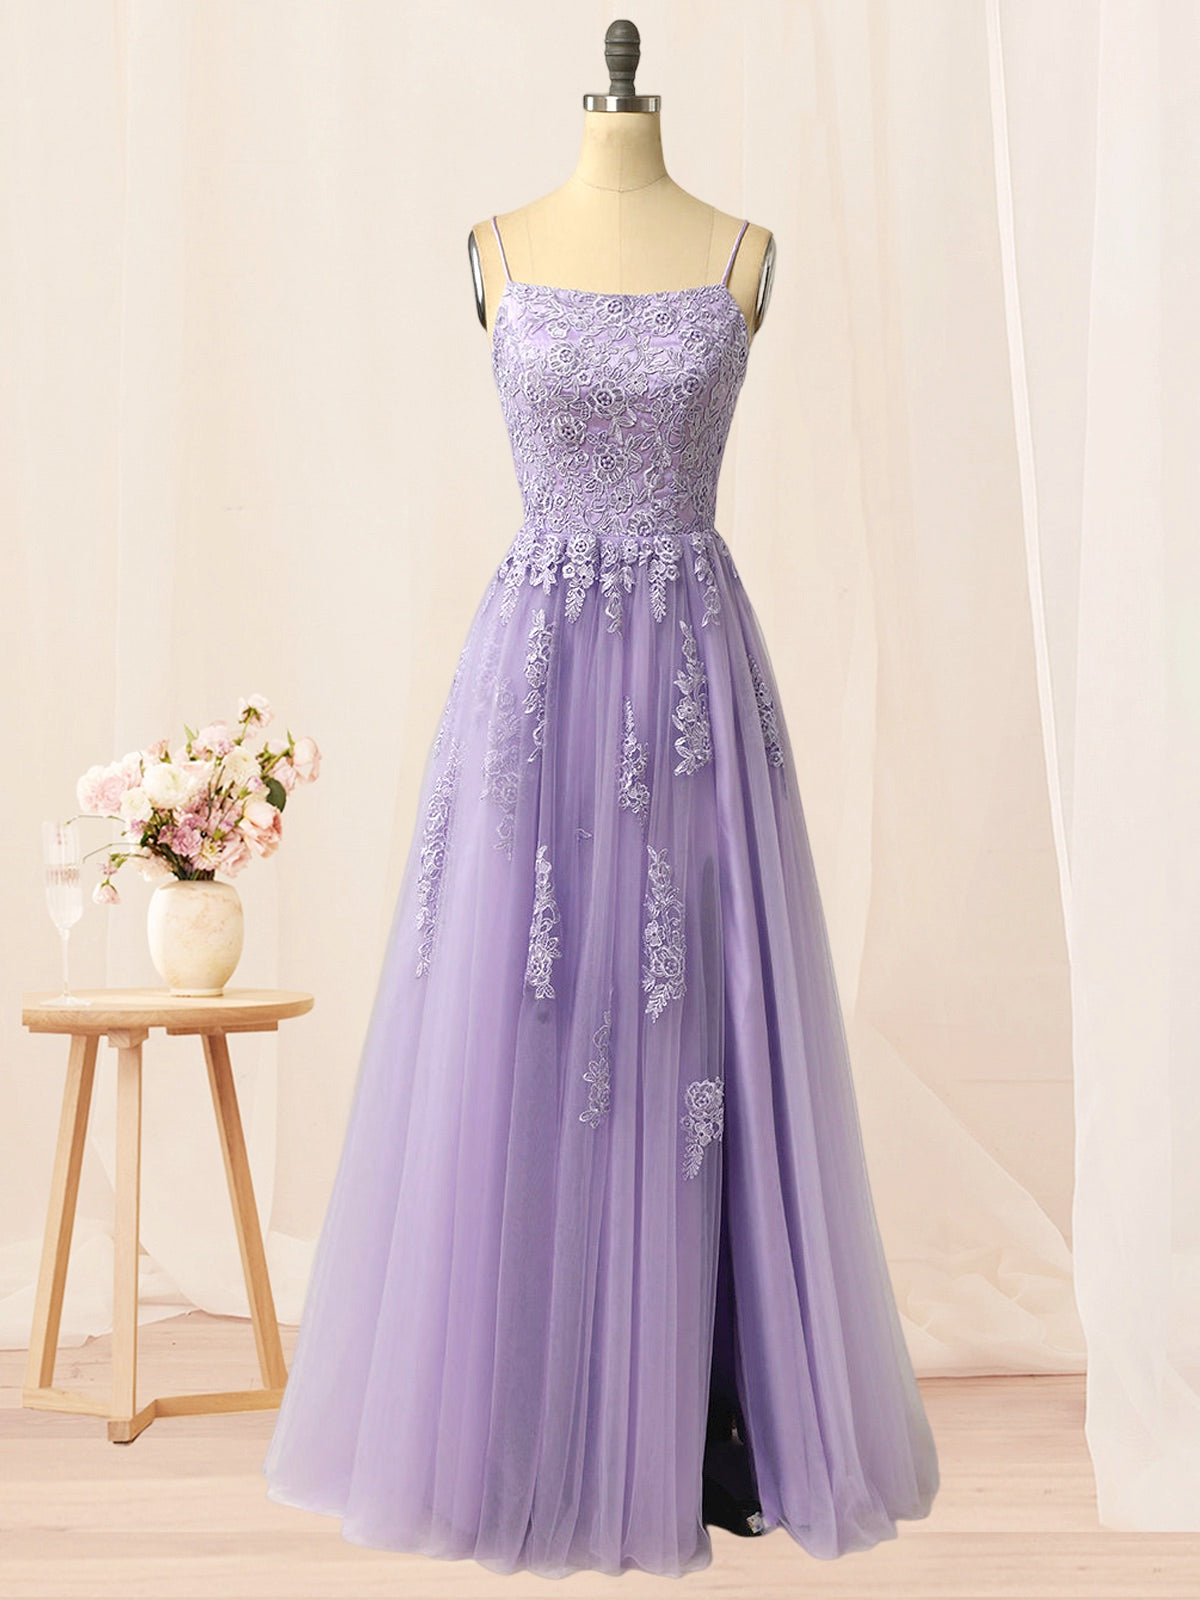 Lace A-Line Spaghetti Straps Sleeveless-Prom Dress-GD101657